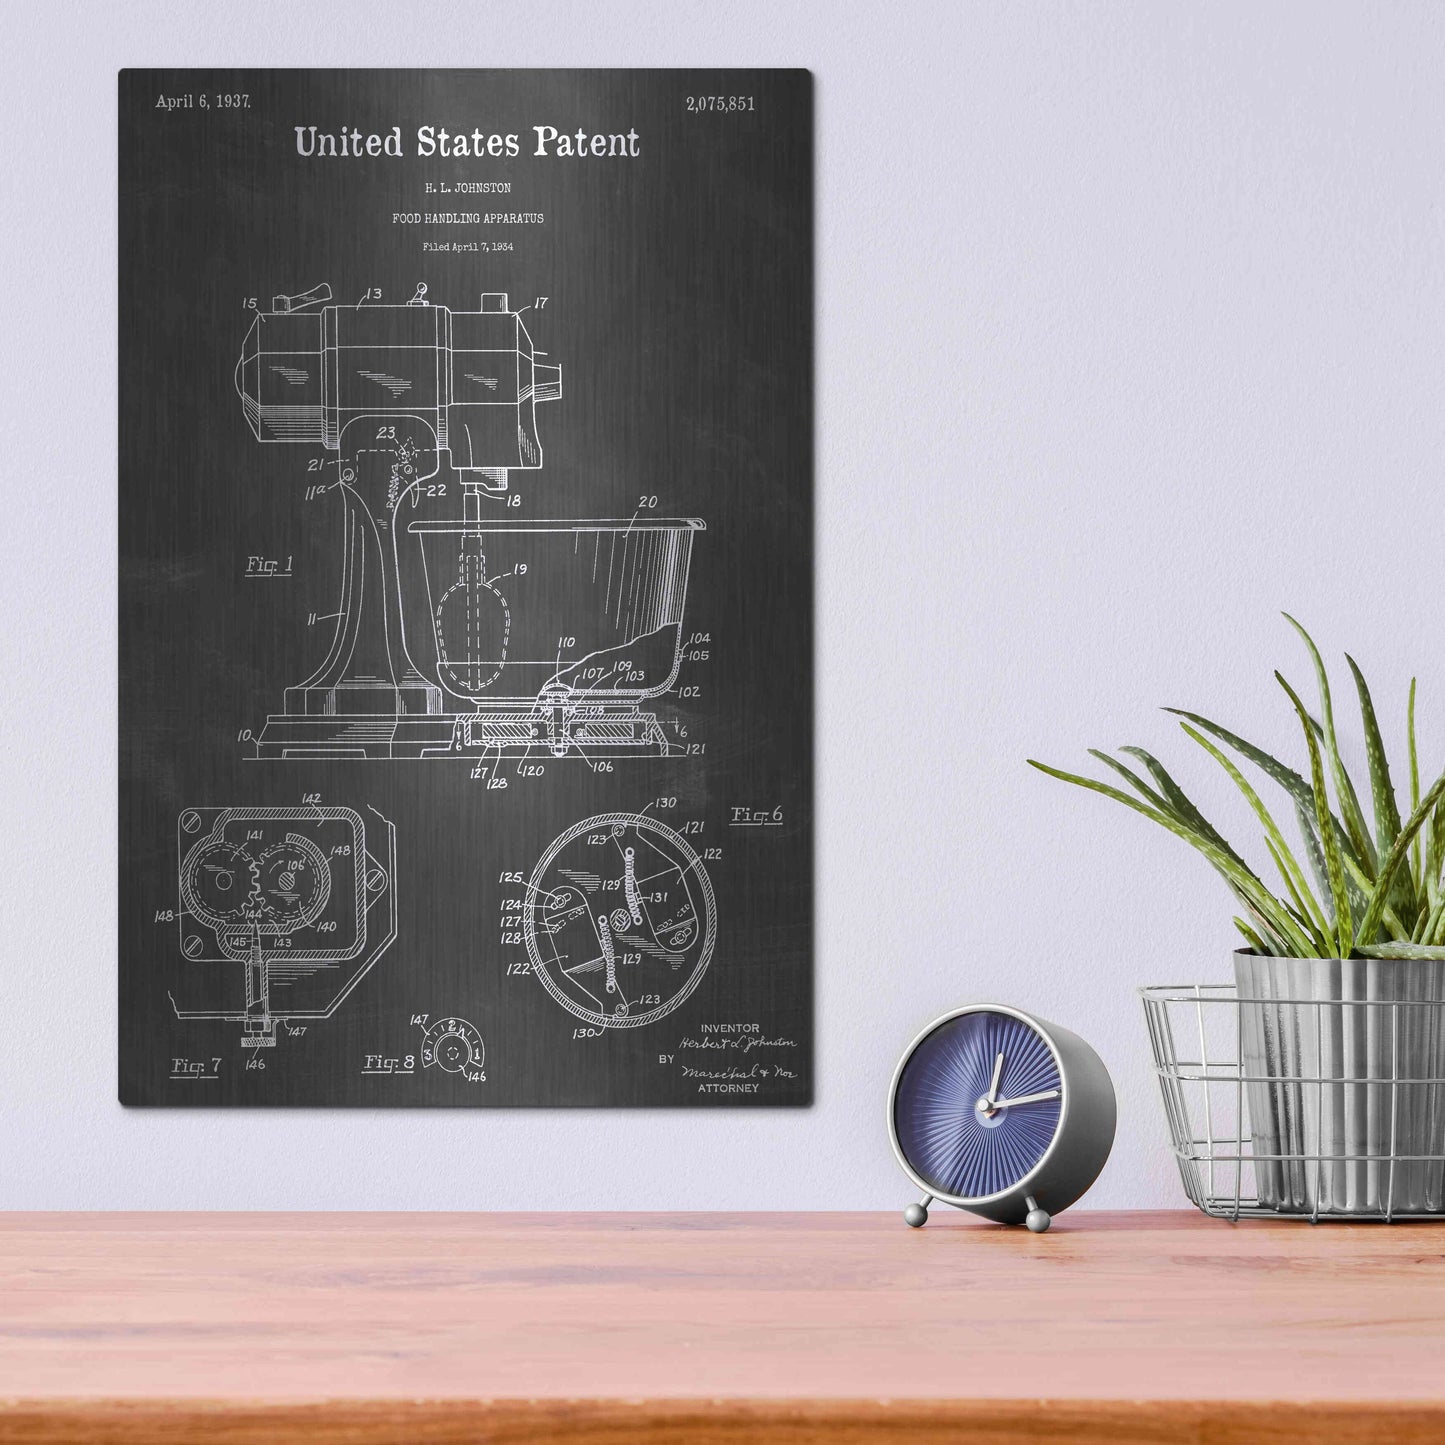 Luxe Metal Art 'Food Handling Vintage Patent Blueprint' by Epic Portfolio, Metal Wall Art,12x16